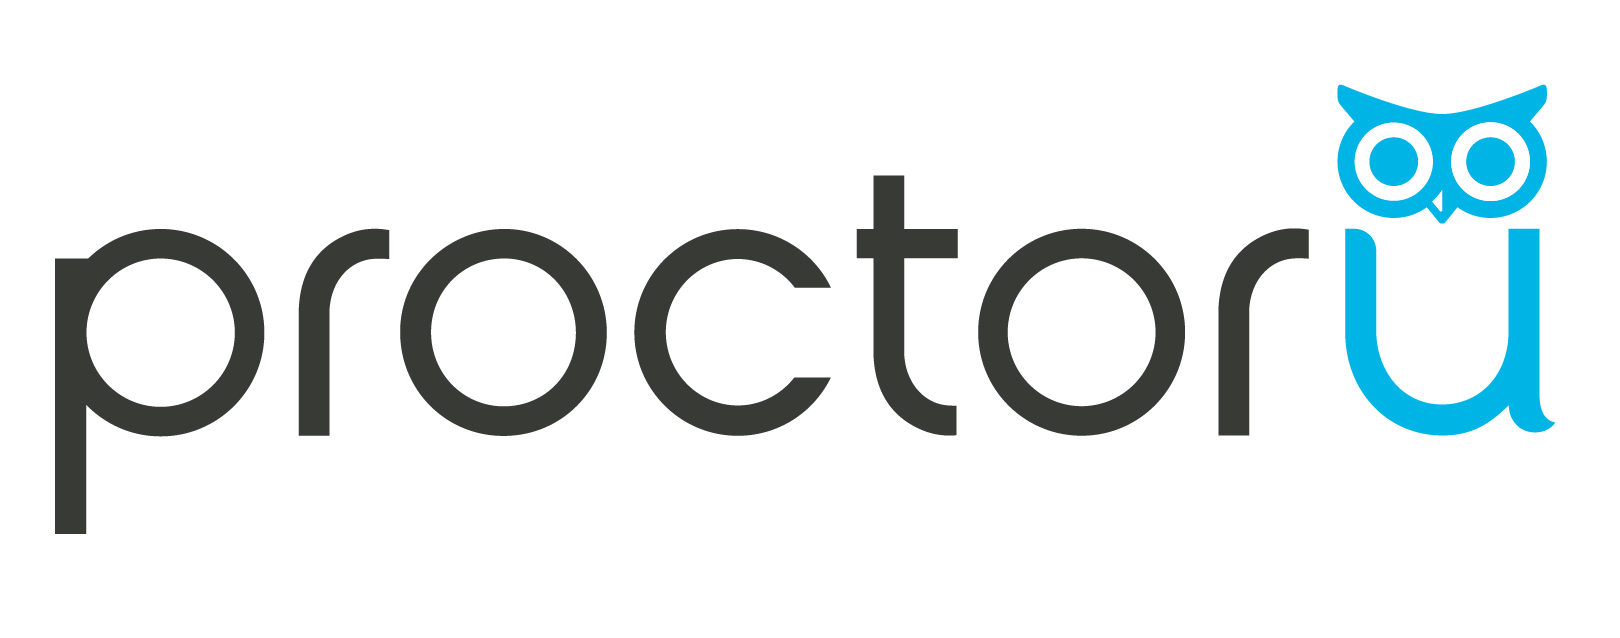 Proctor Logo - ProctorU Competitors, Revenue and Employees Company Profile